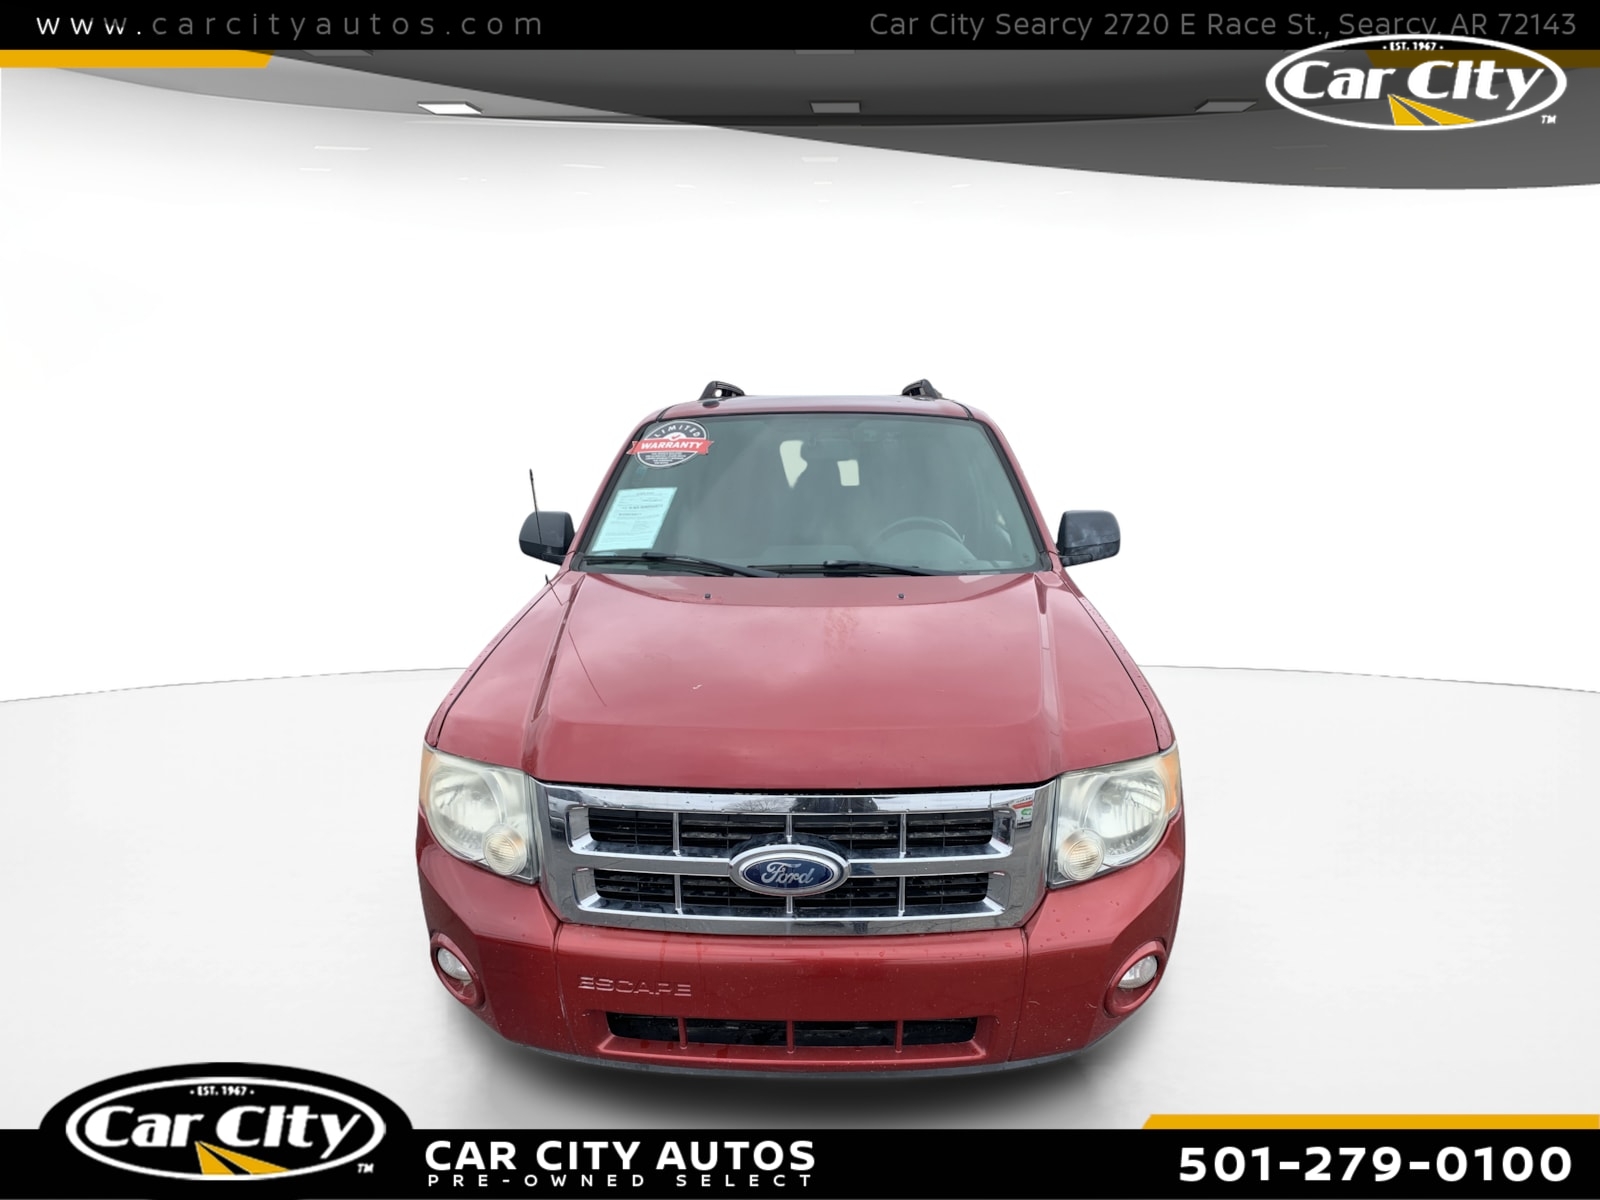 2010 Ford Escape XLT  - AKB09588  - Car City Autos